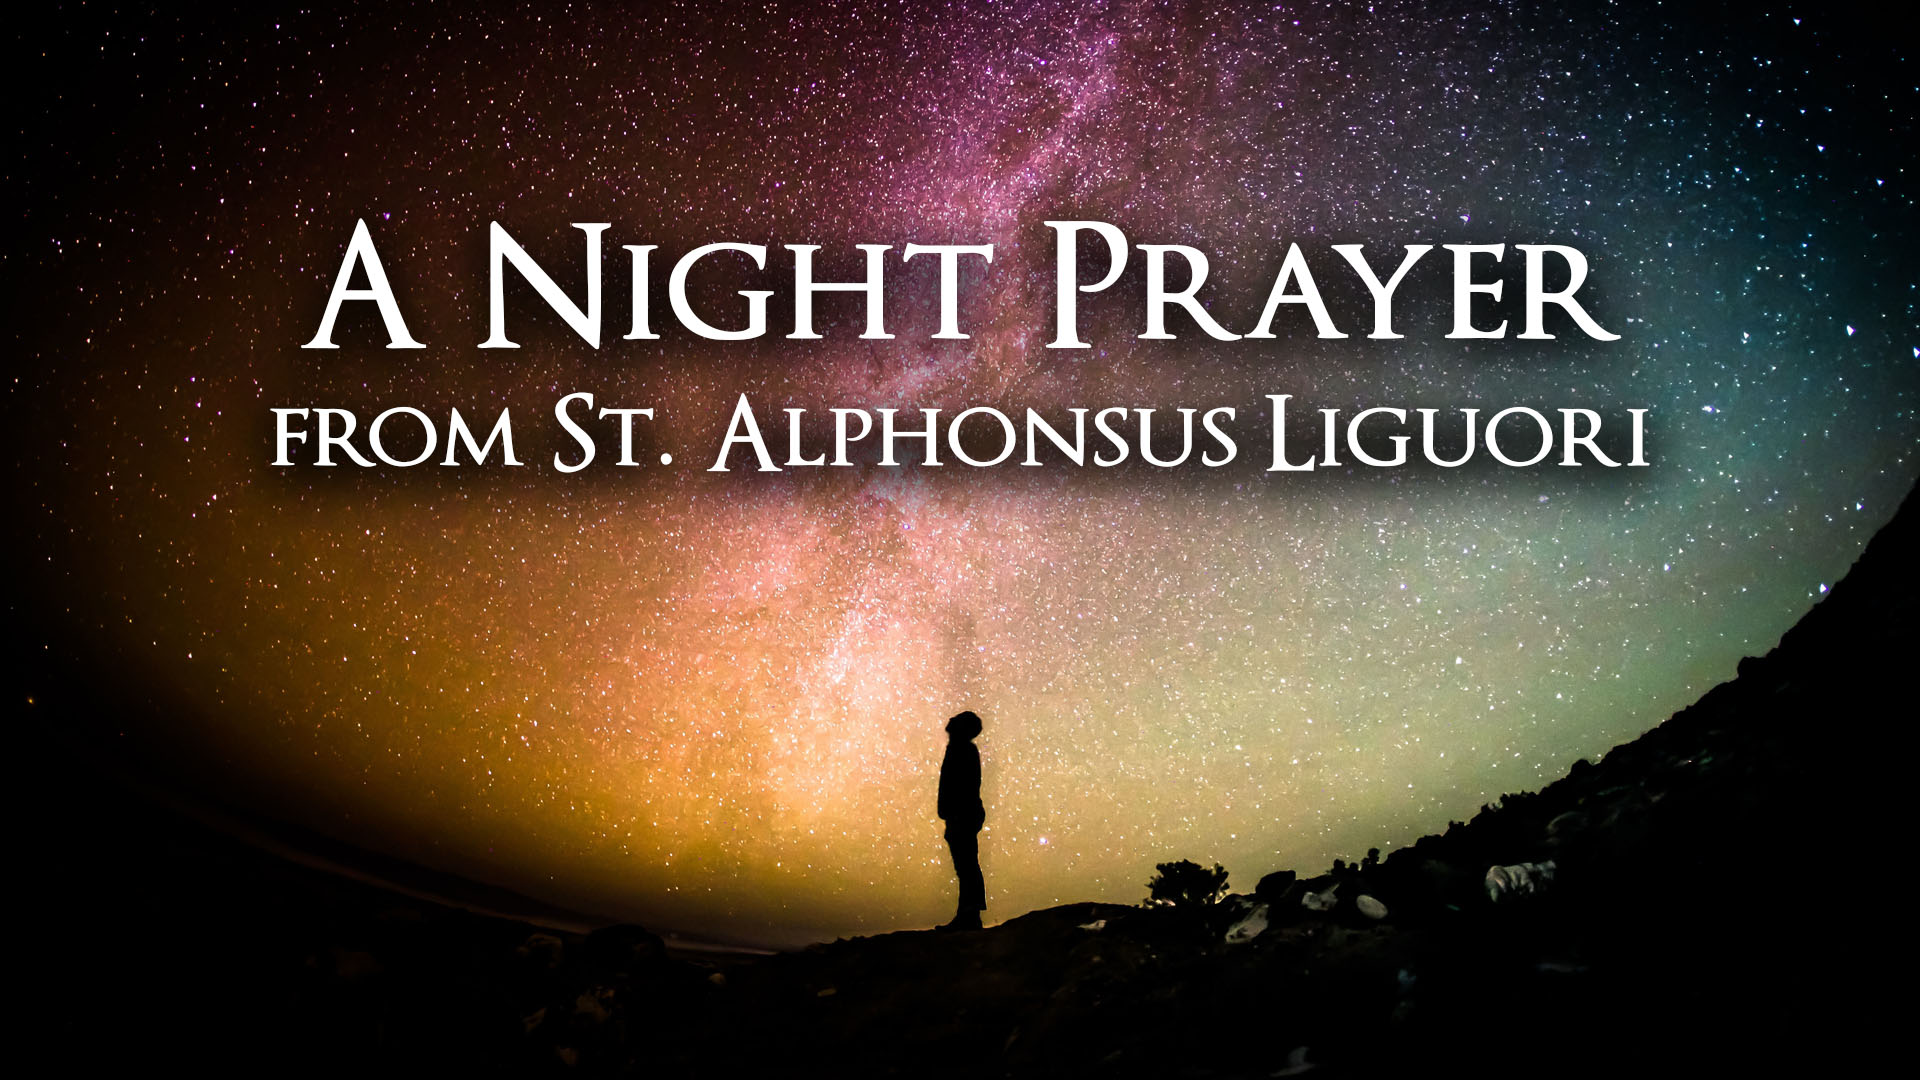 A Night Prayer from St. Alphonsus Liguori